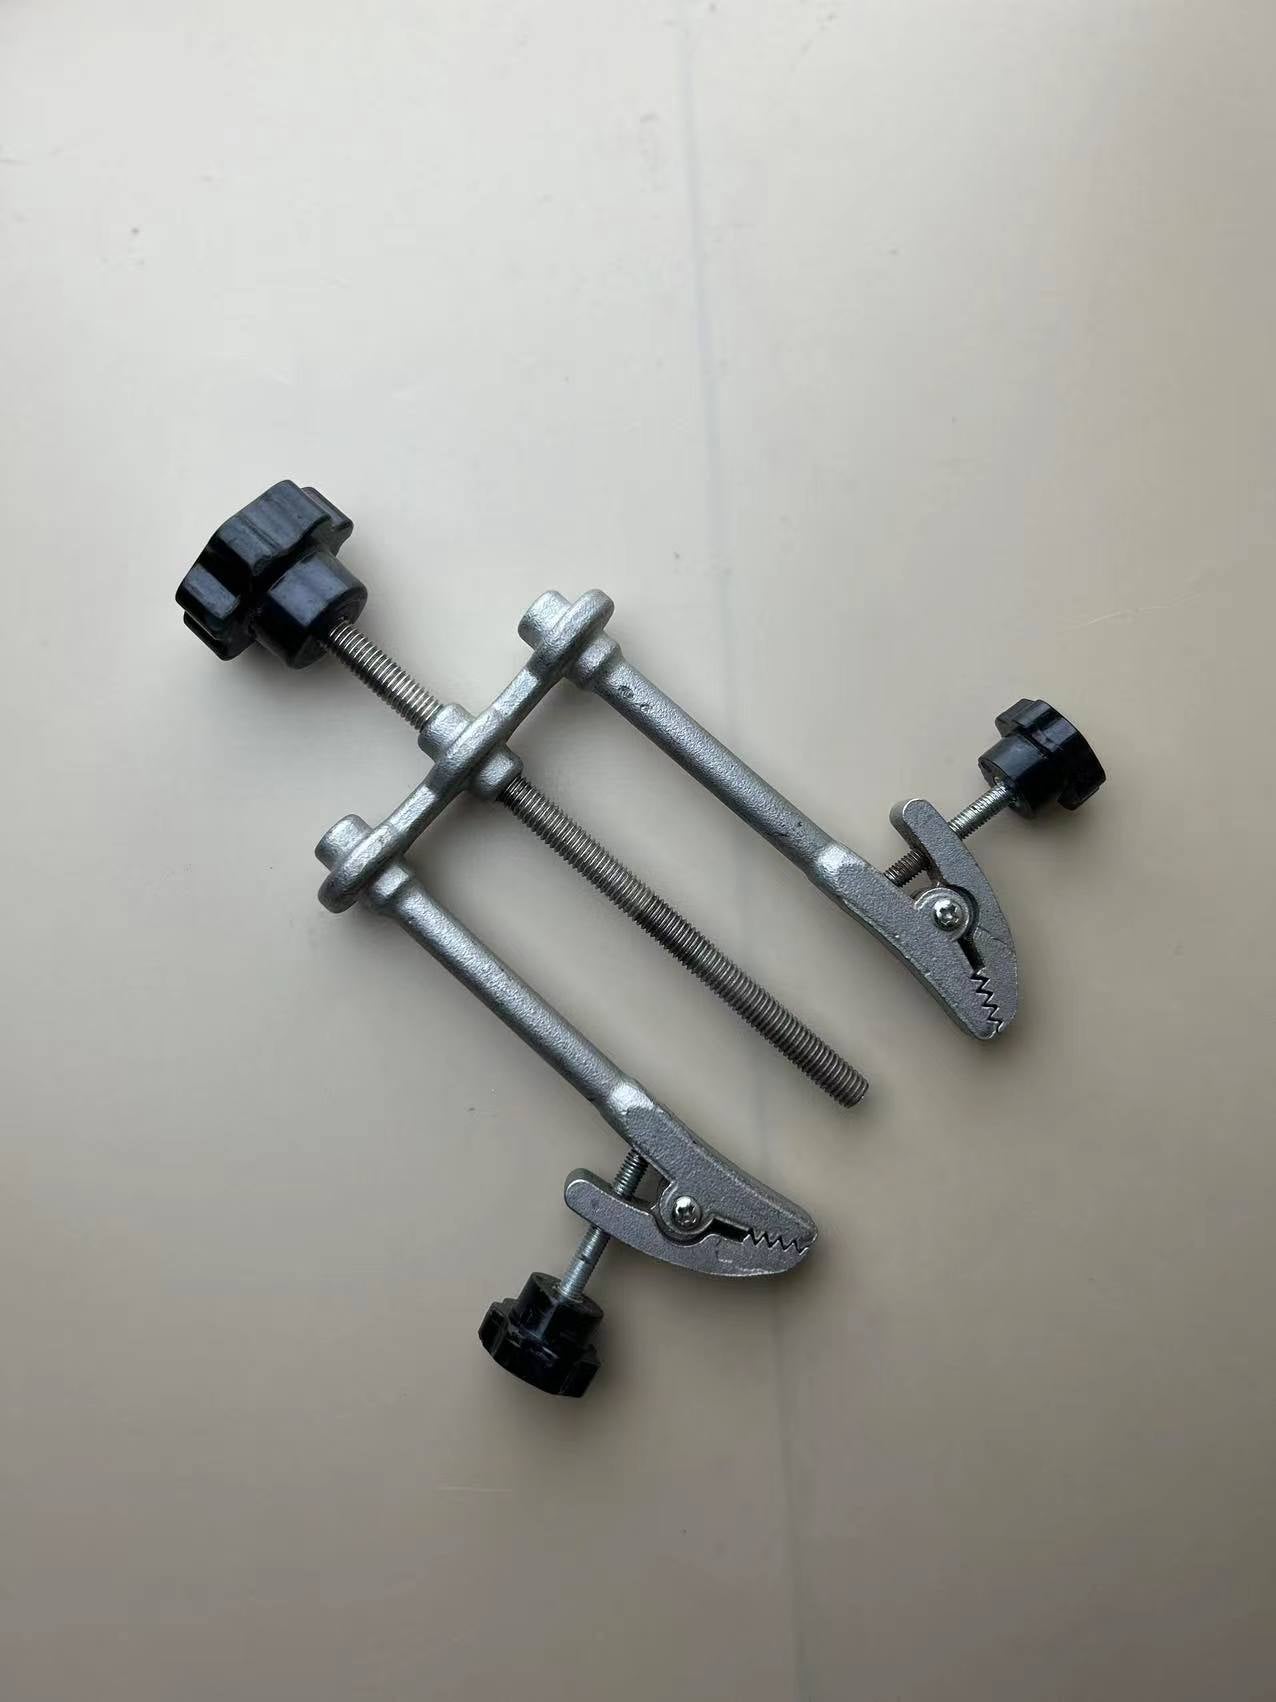 Adjustable clamp for upper crimping